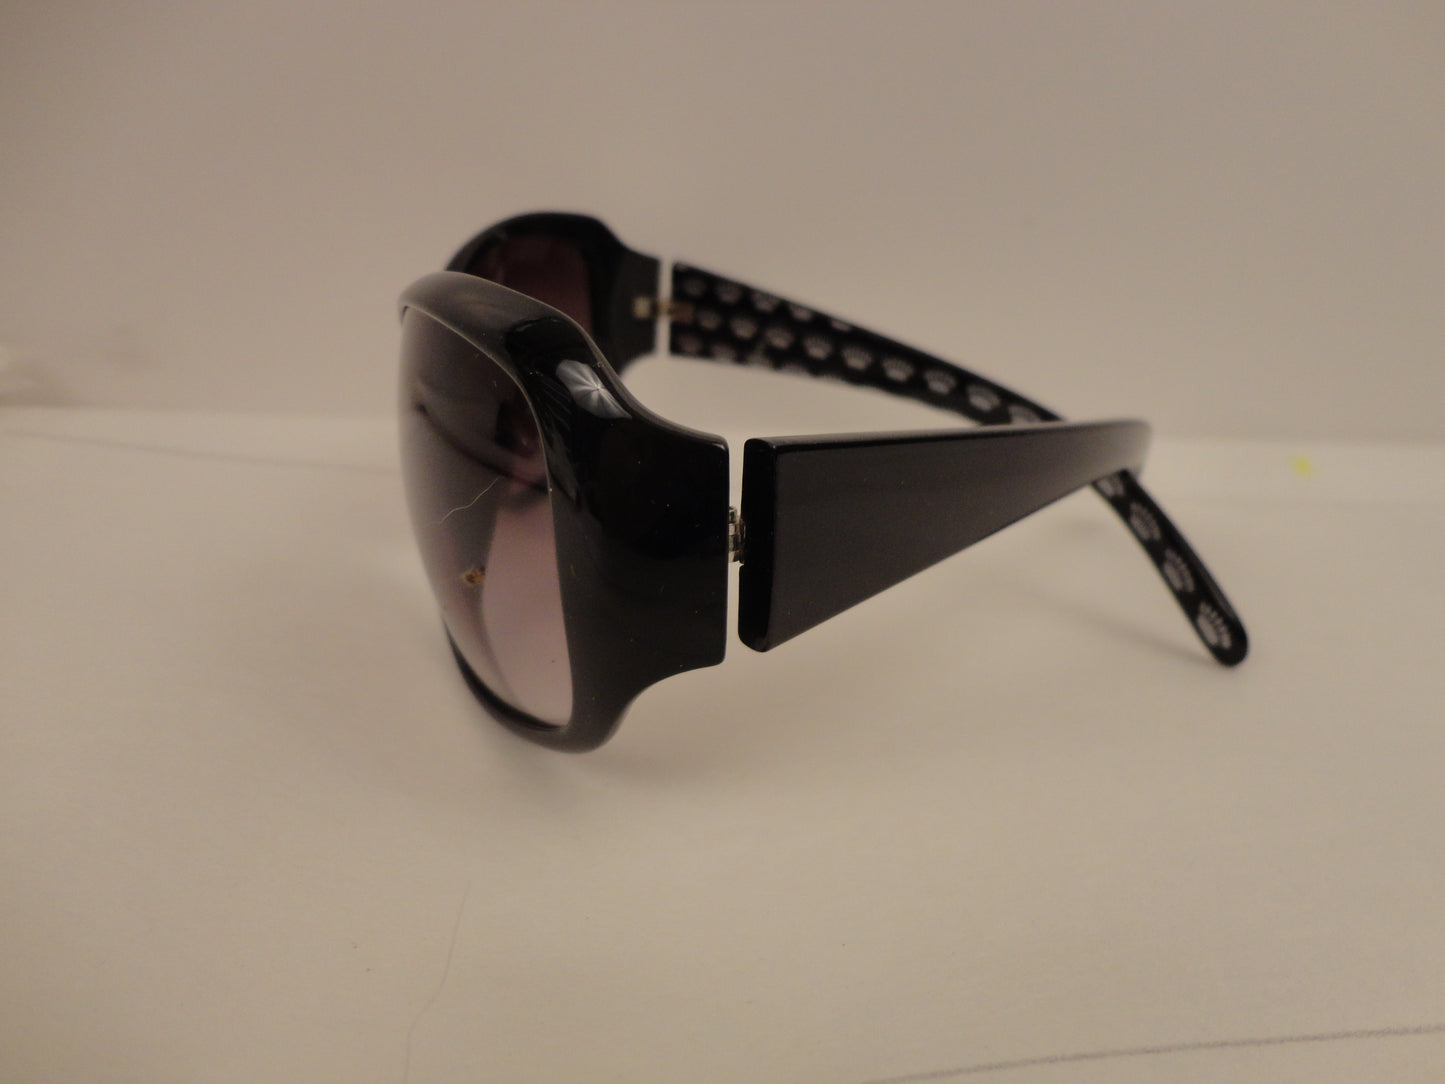 Juicy Couture Sunglasses Black Frames NWT SKU 400-50